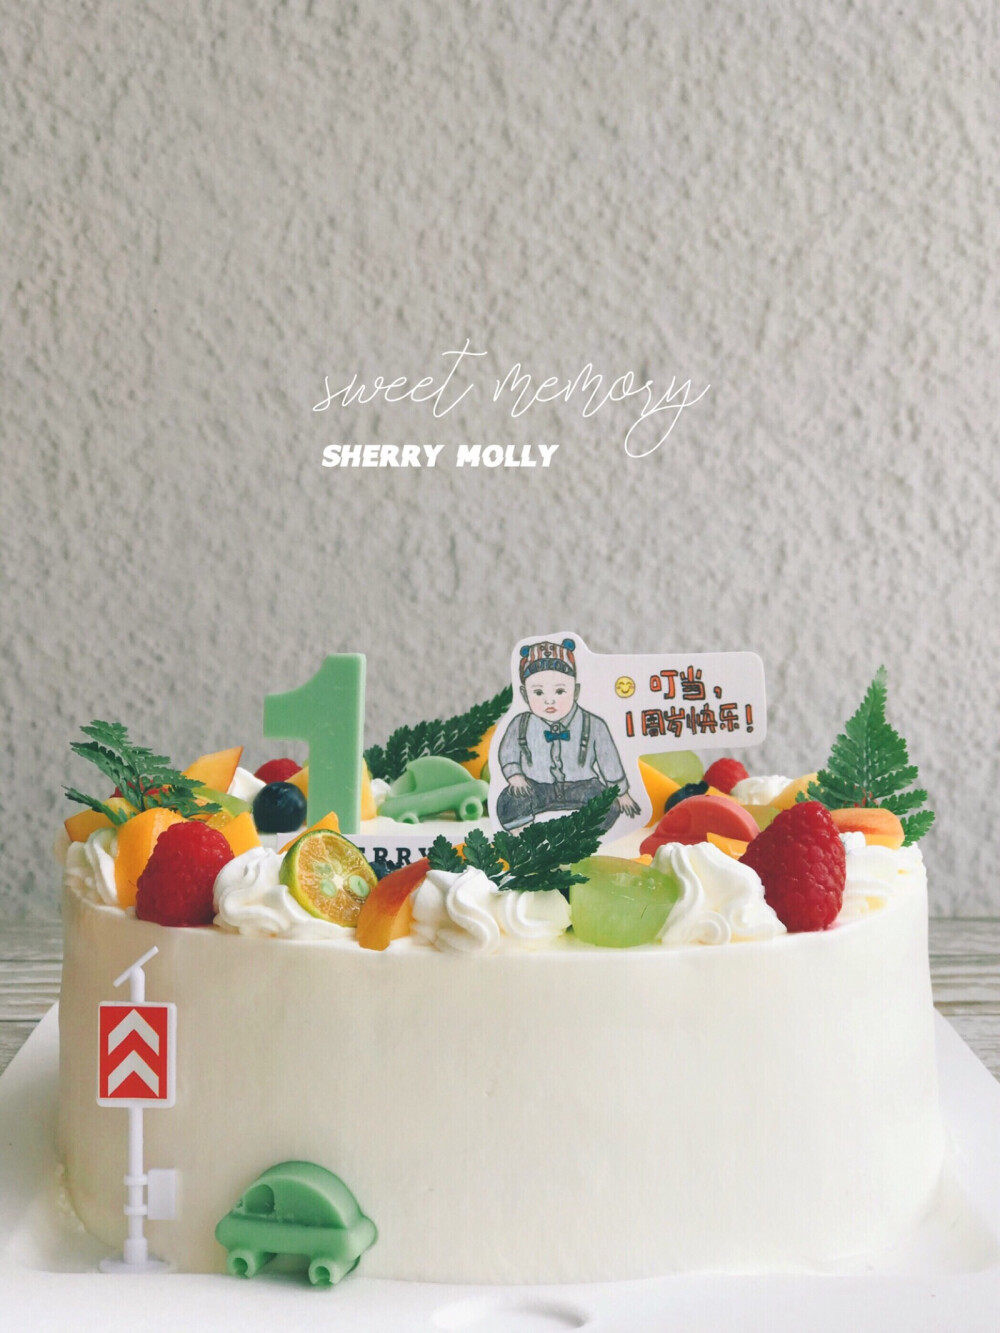 #SHERRY Molly家の下午茶#—『红丝绒cake』给儿子订的1周岁生日cake～喜欢水果多一点 然后再满足一下小朋友喜欢小车车的要求 小叮当 生日快乐呐～